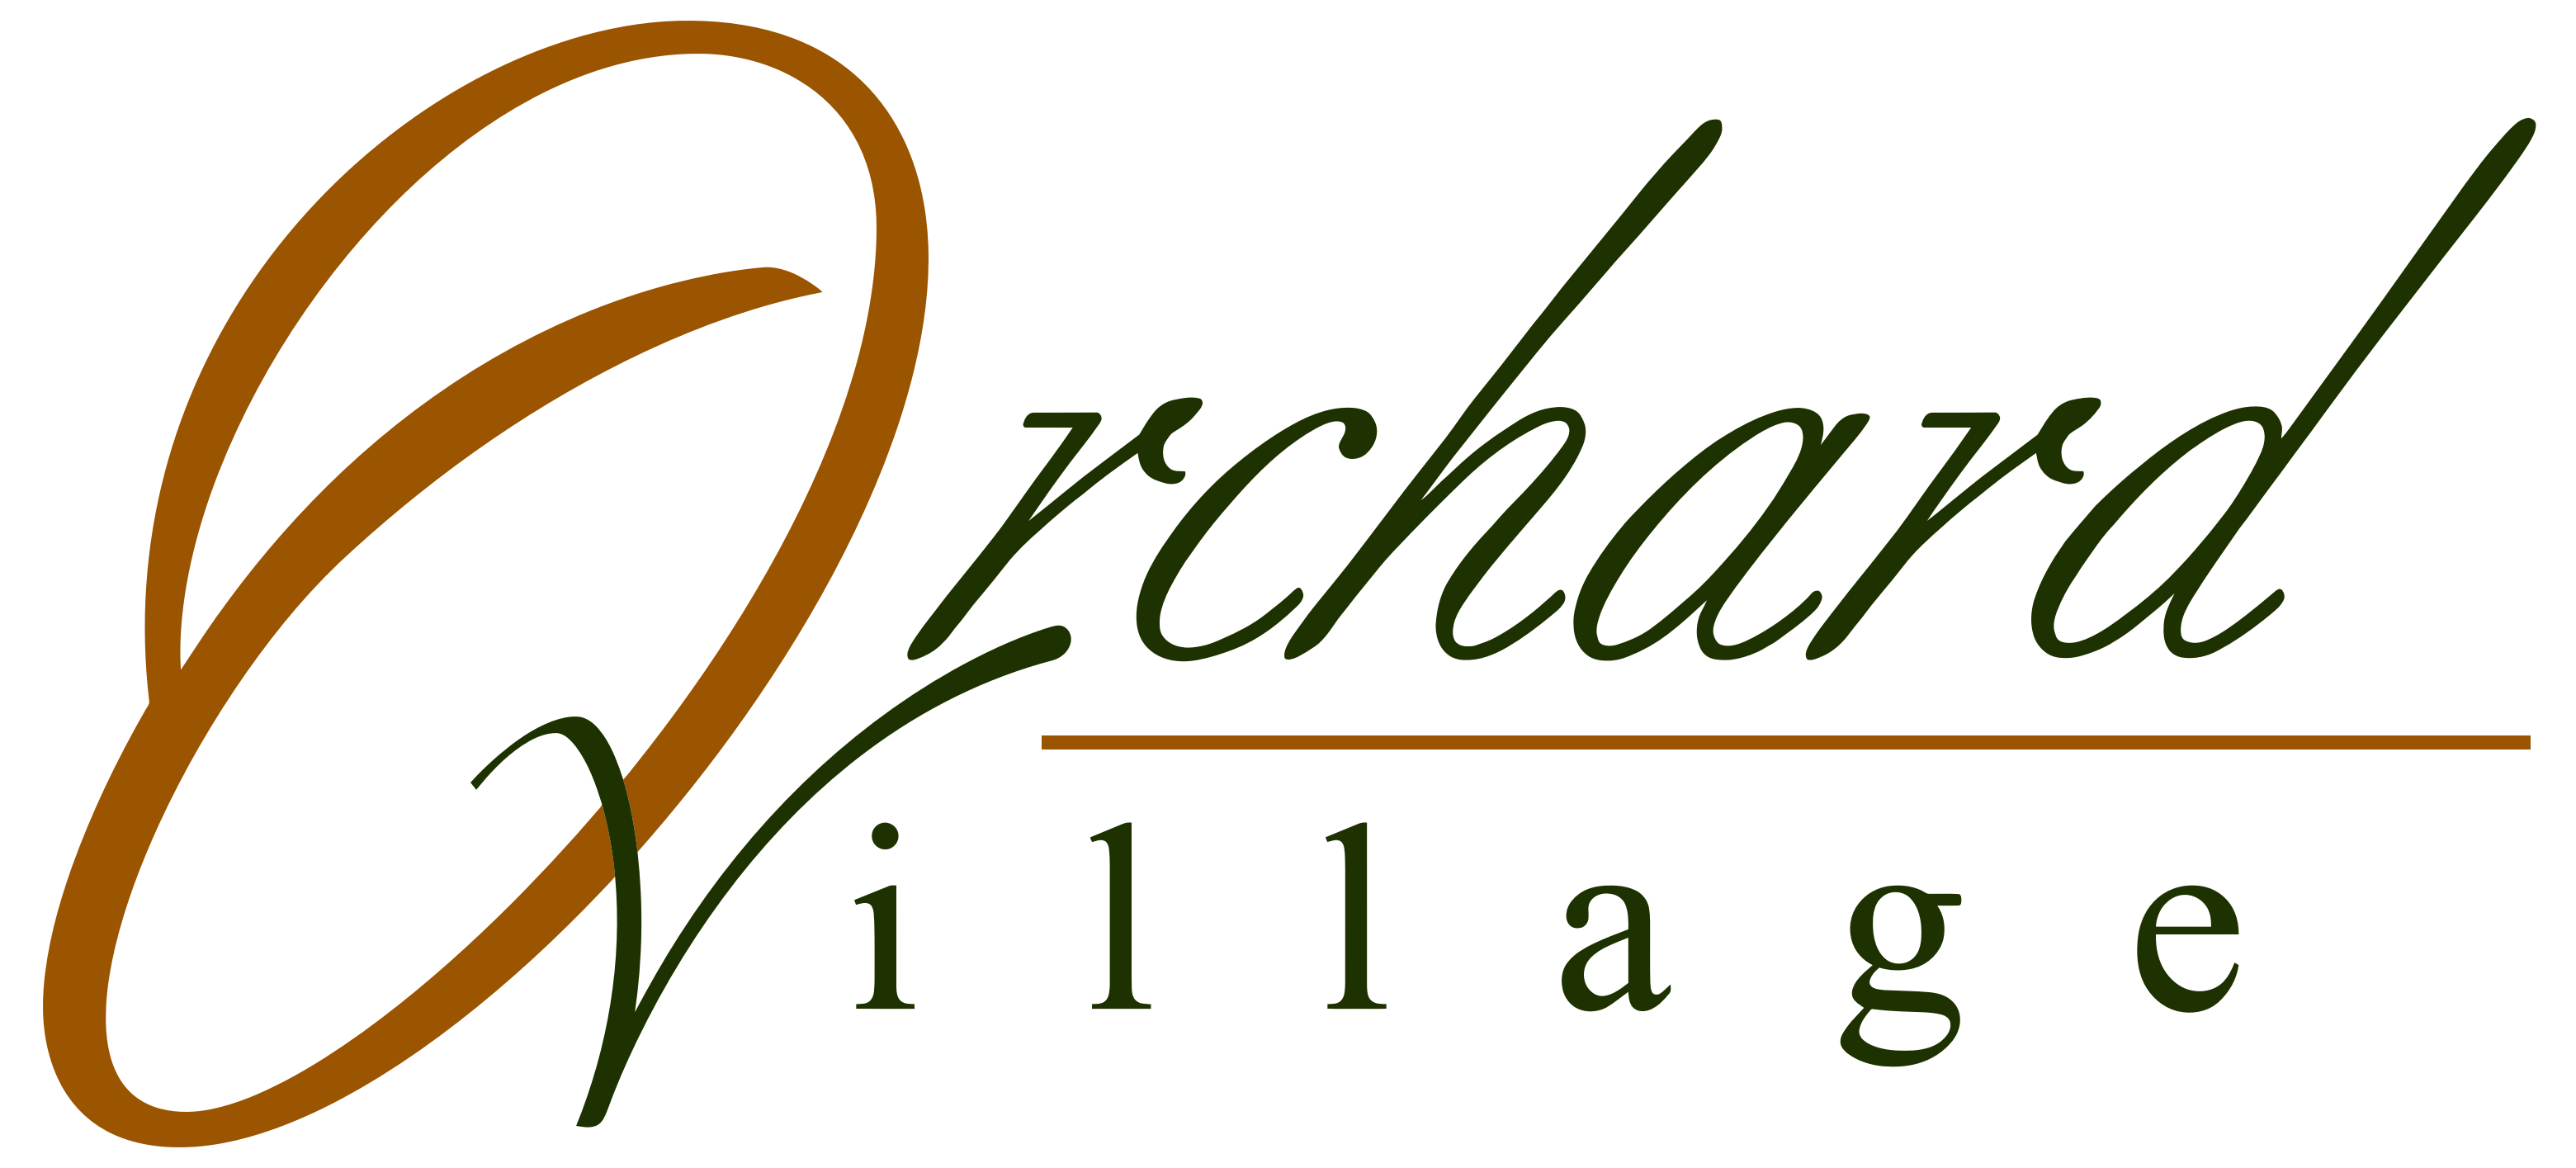 Orchard Village Promotional Logo